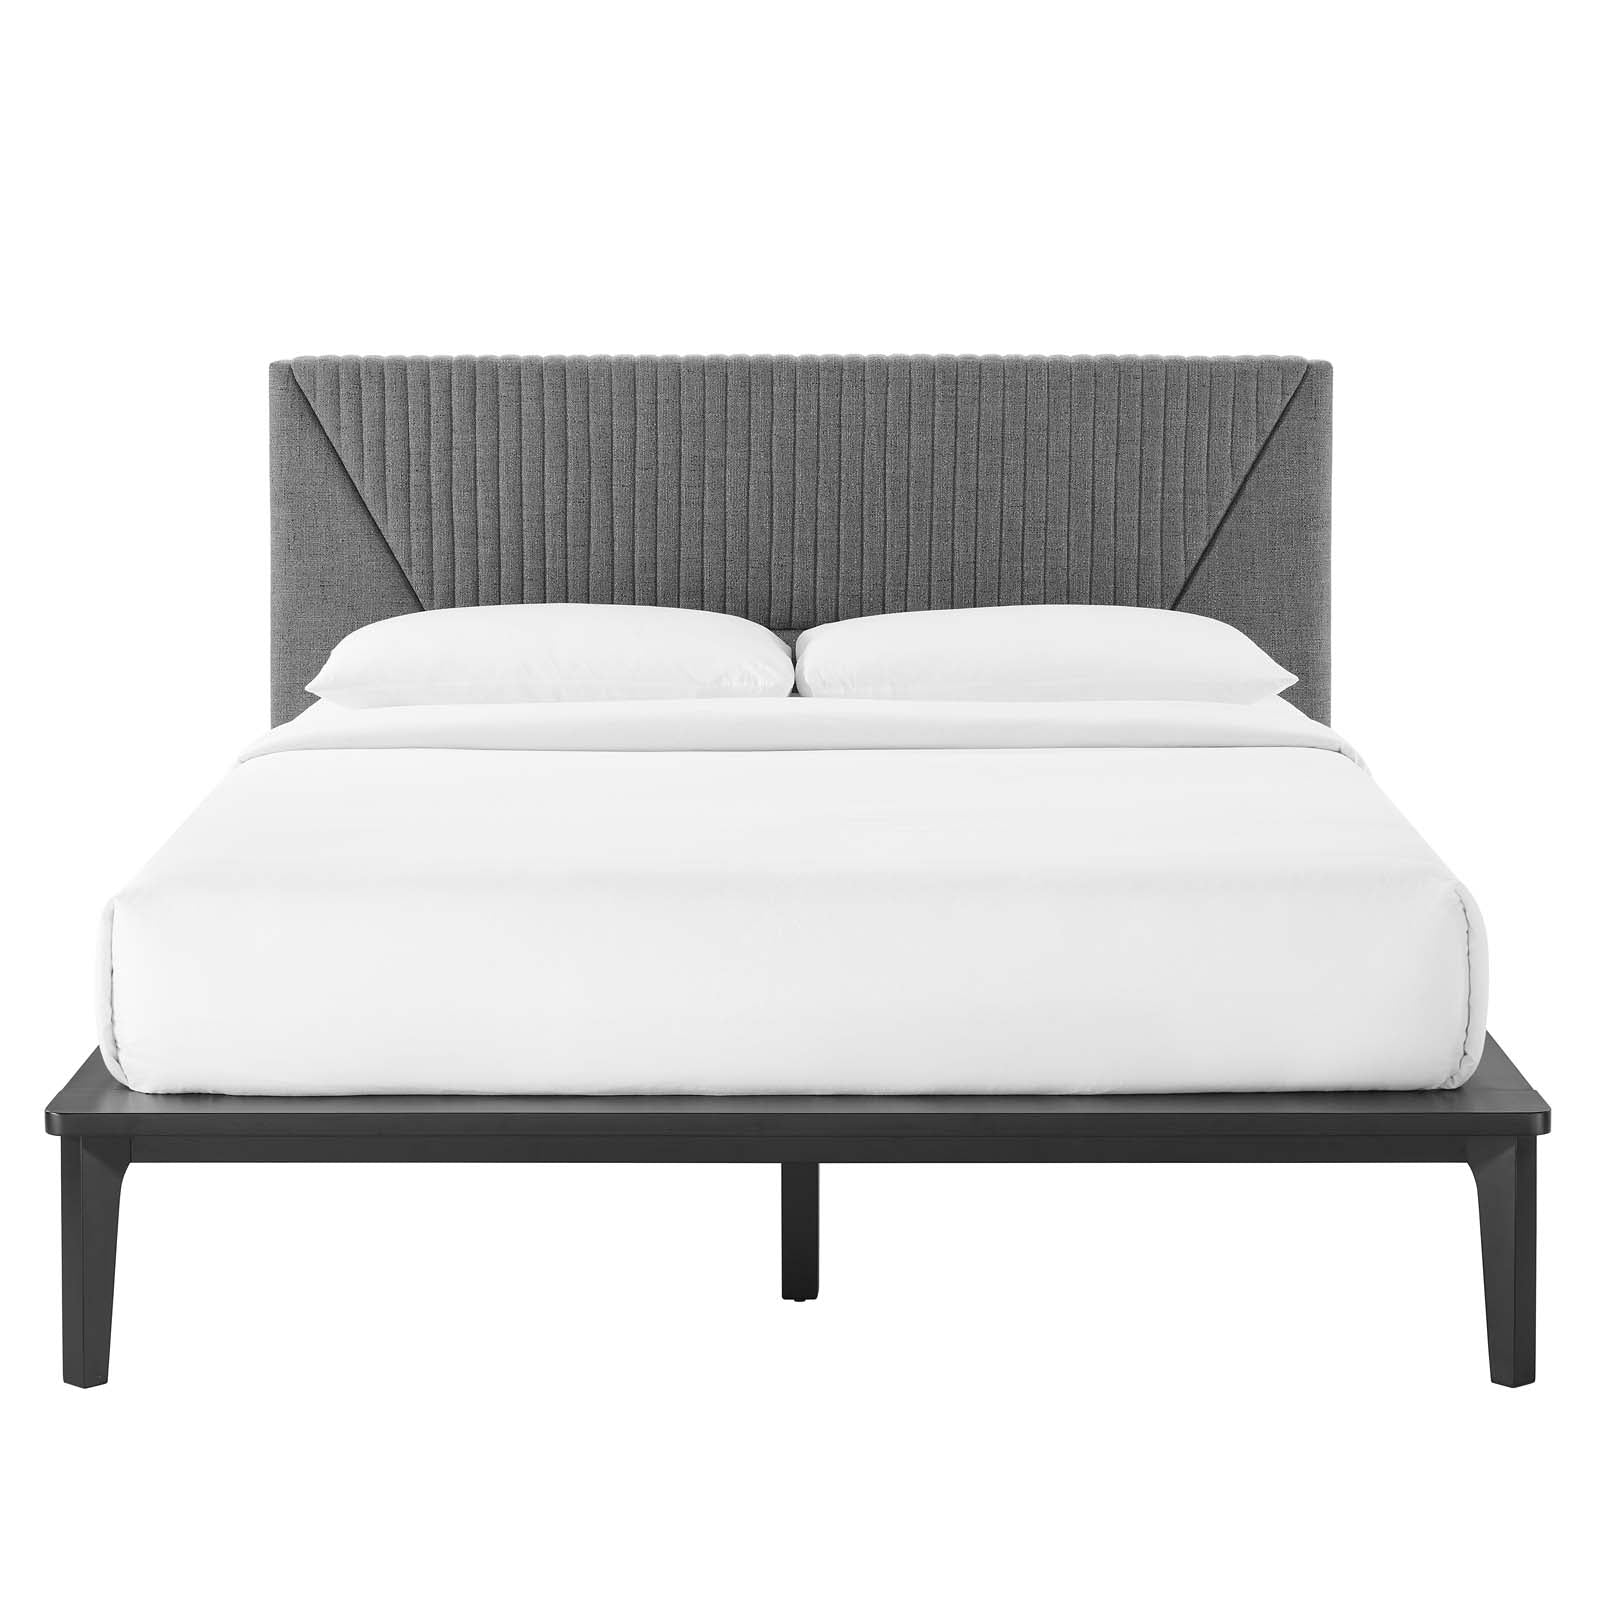 Modway Beds - Dakota Upholstered Queen Platform Bed Black Gray